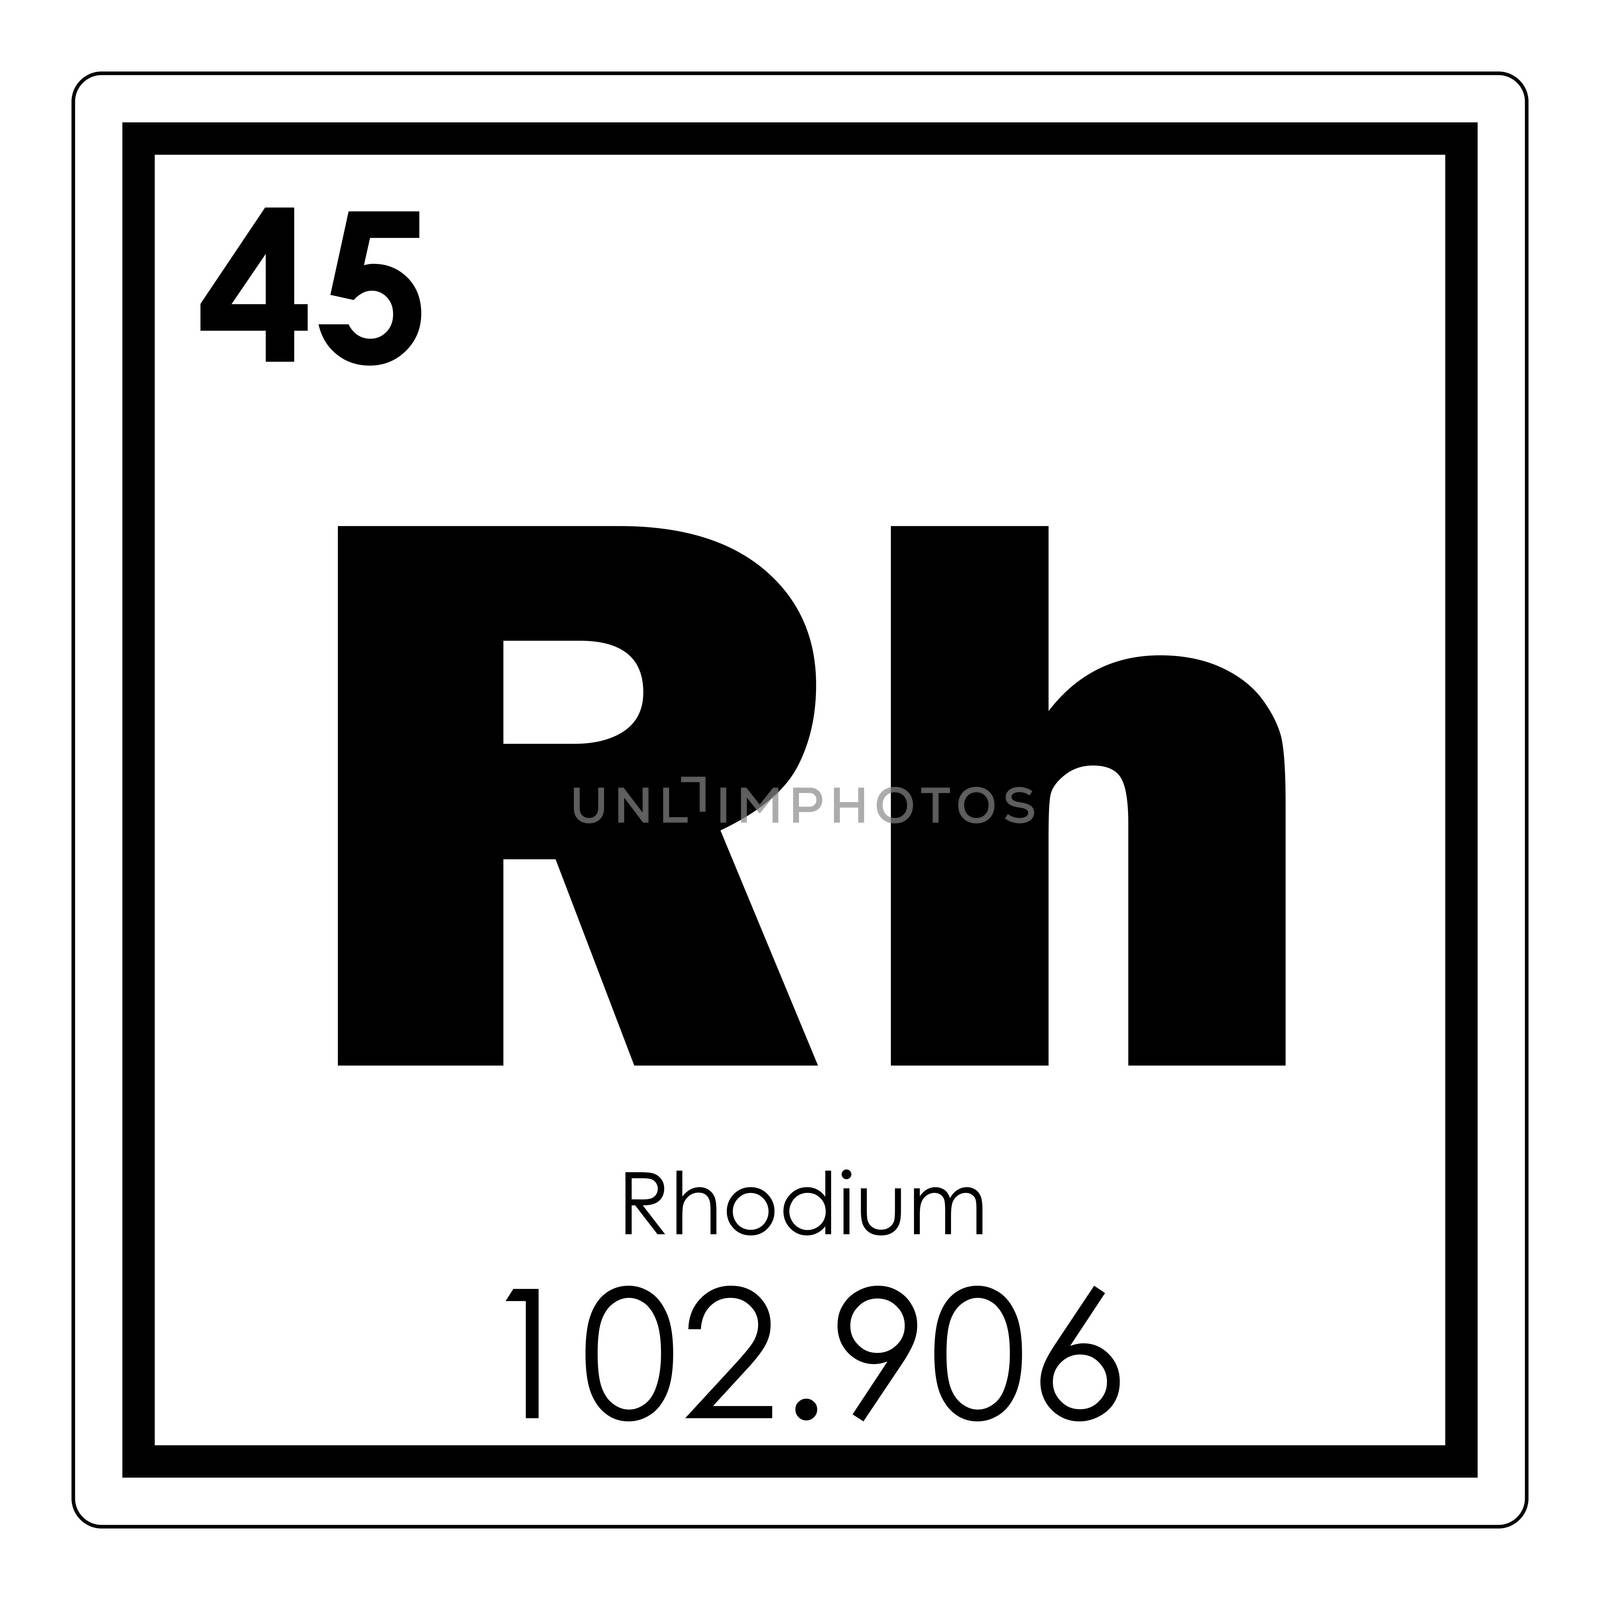 Rhodium chemical element by tony4urban